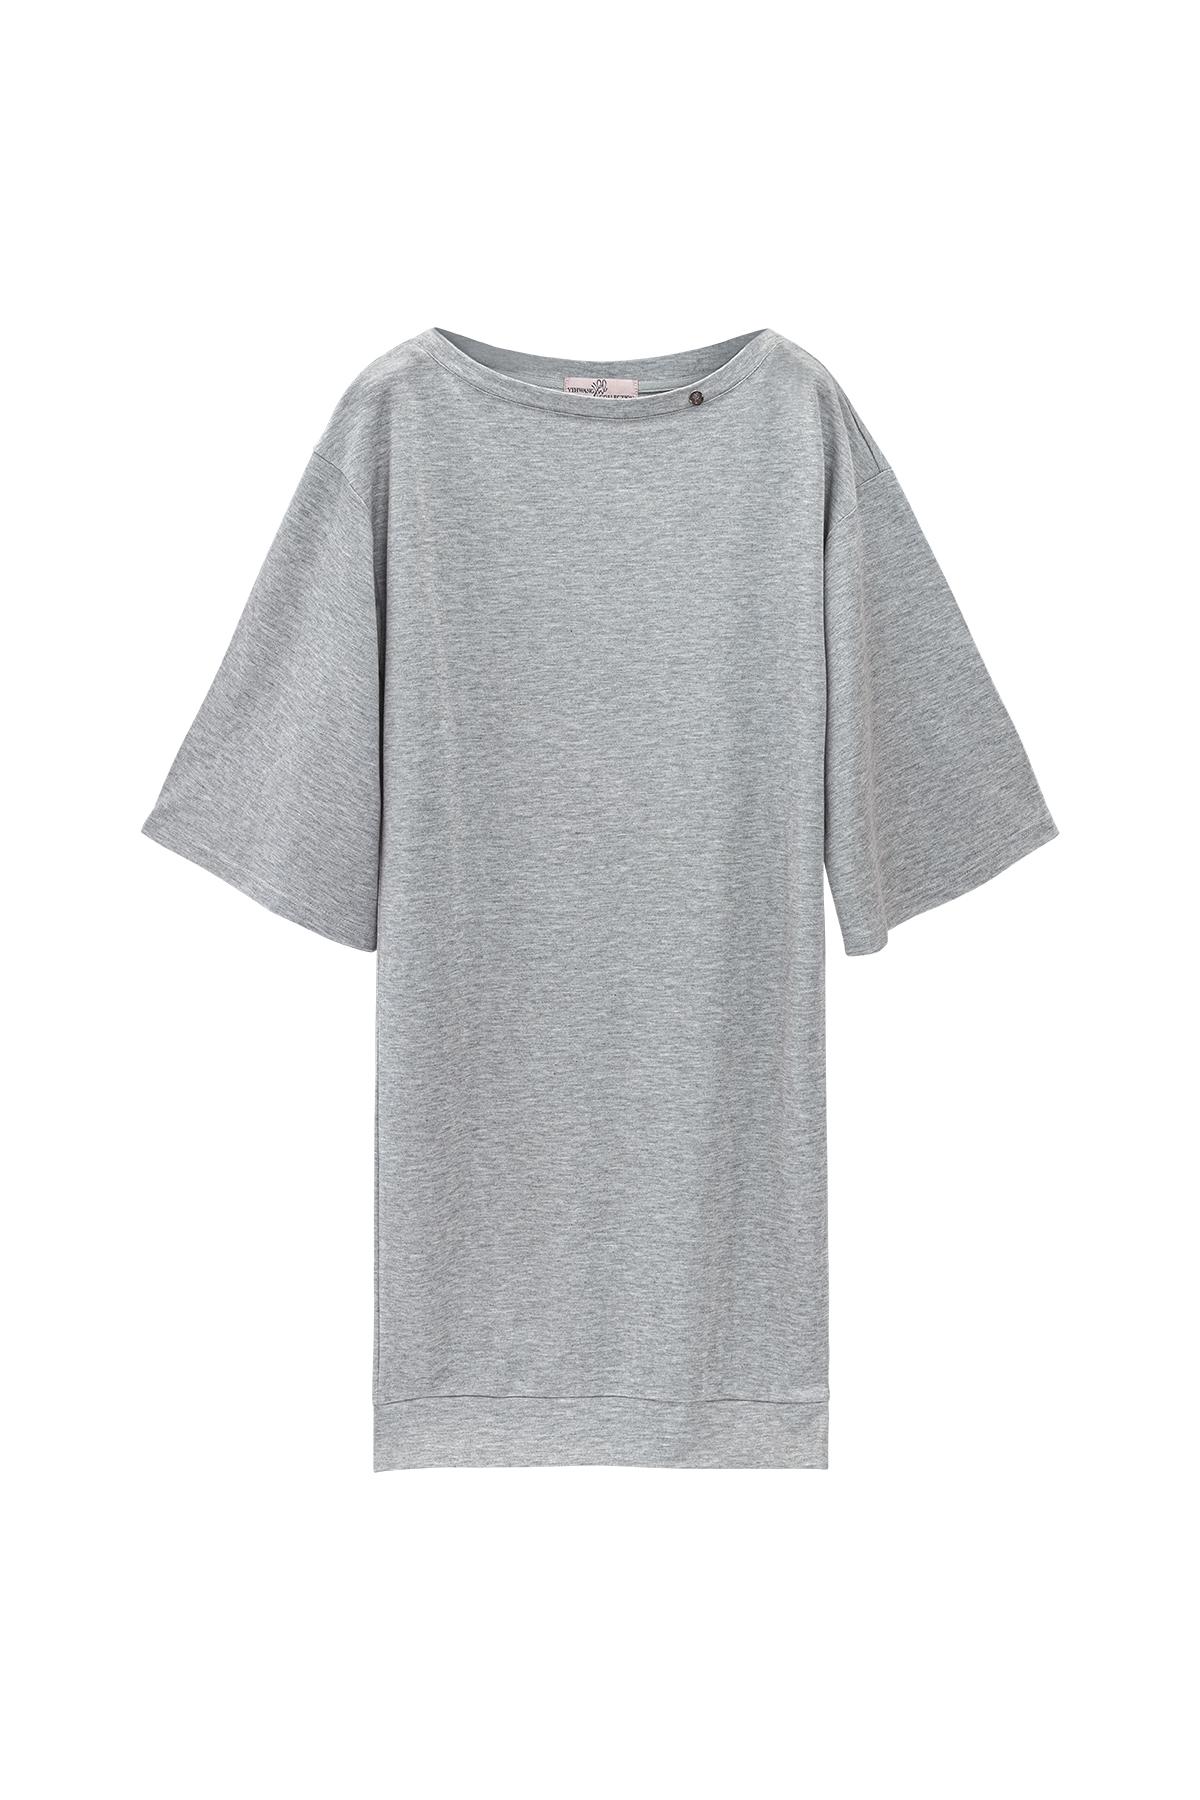 T-shirt dress with shiny coating Grey S 